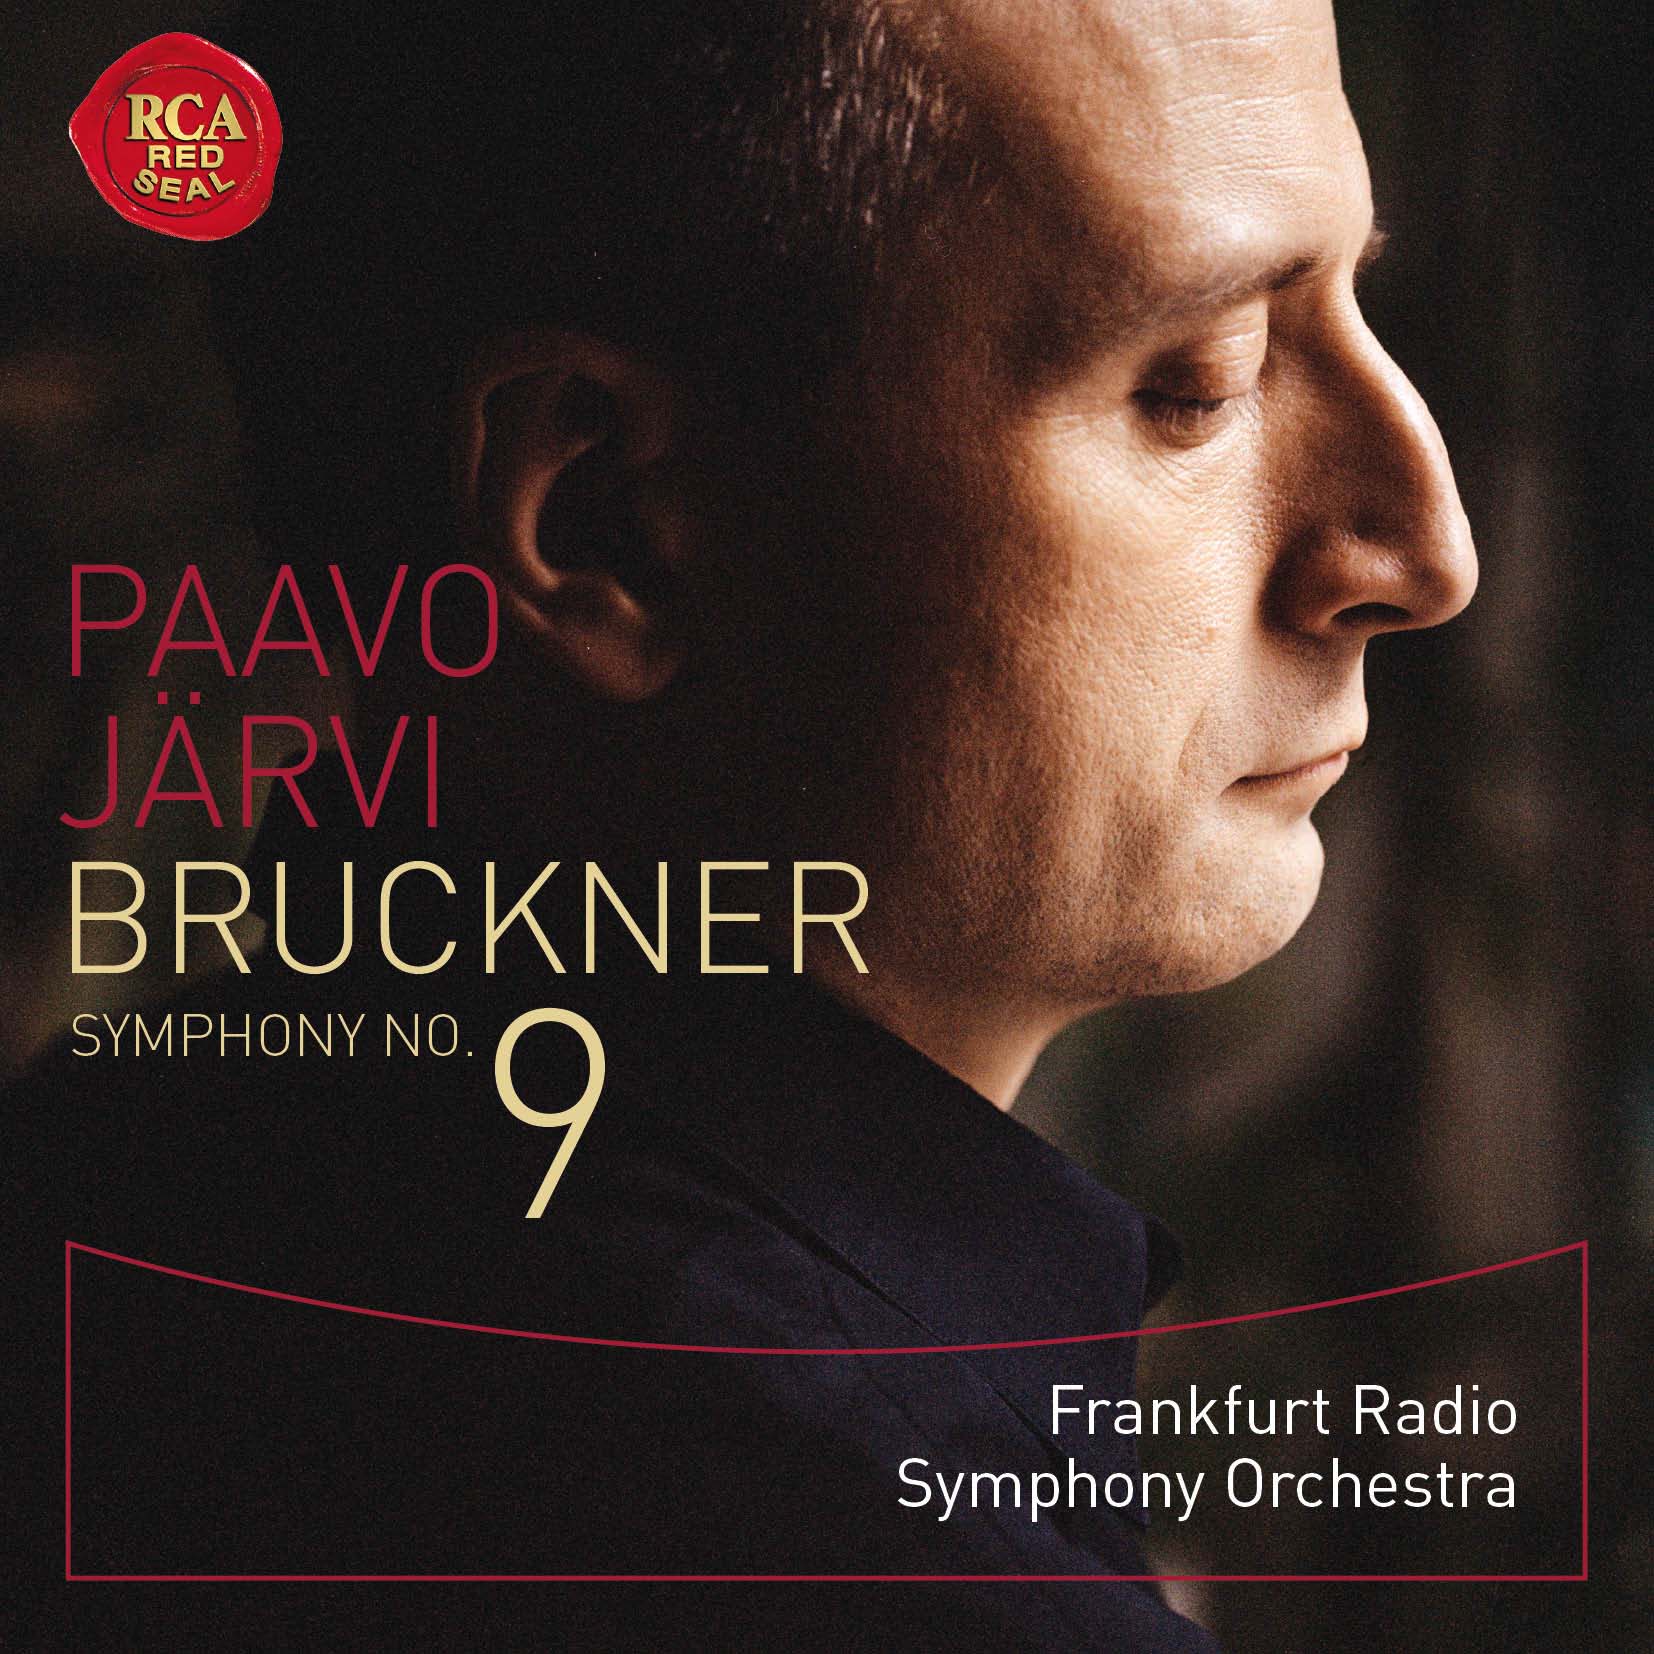 Paavo Jarvi & Frankfurt Radio Symphony Orchestra - Bruckner: Symphony No 9 (2009) MCH SACD ISO + FLAC 24bit/48kHz